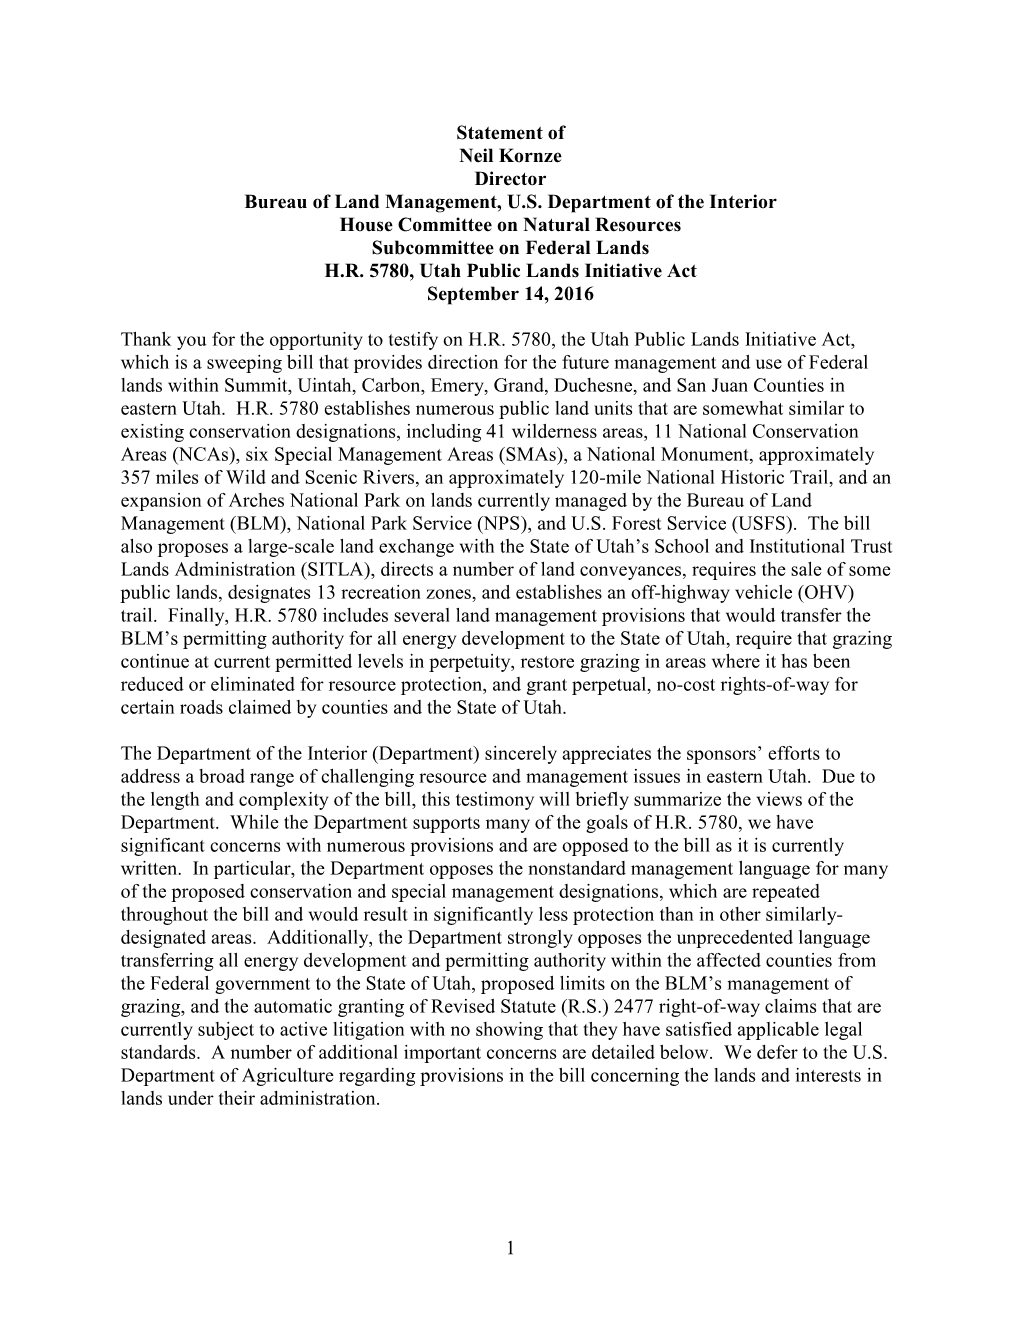 1 Statement of Neil Kornze Director Bureau of Land Management, U.S